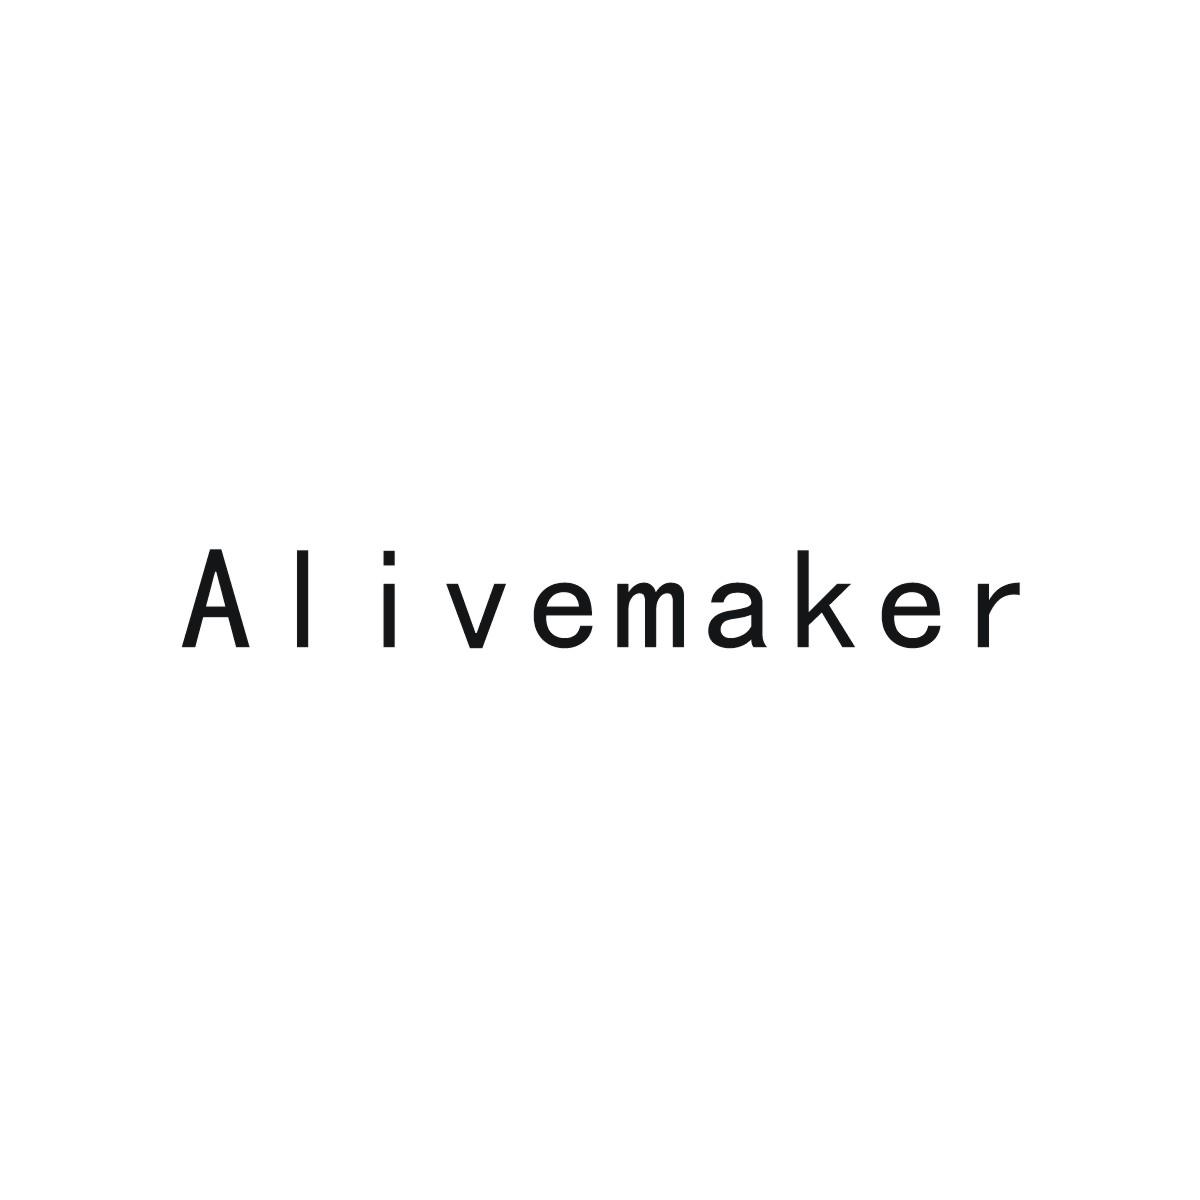 Alivemaker滑轮胶带商标转让费用买卖交易流程